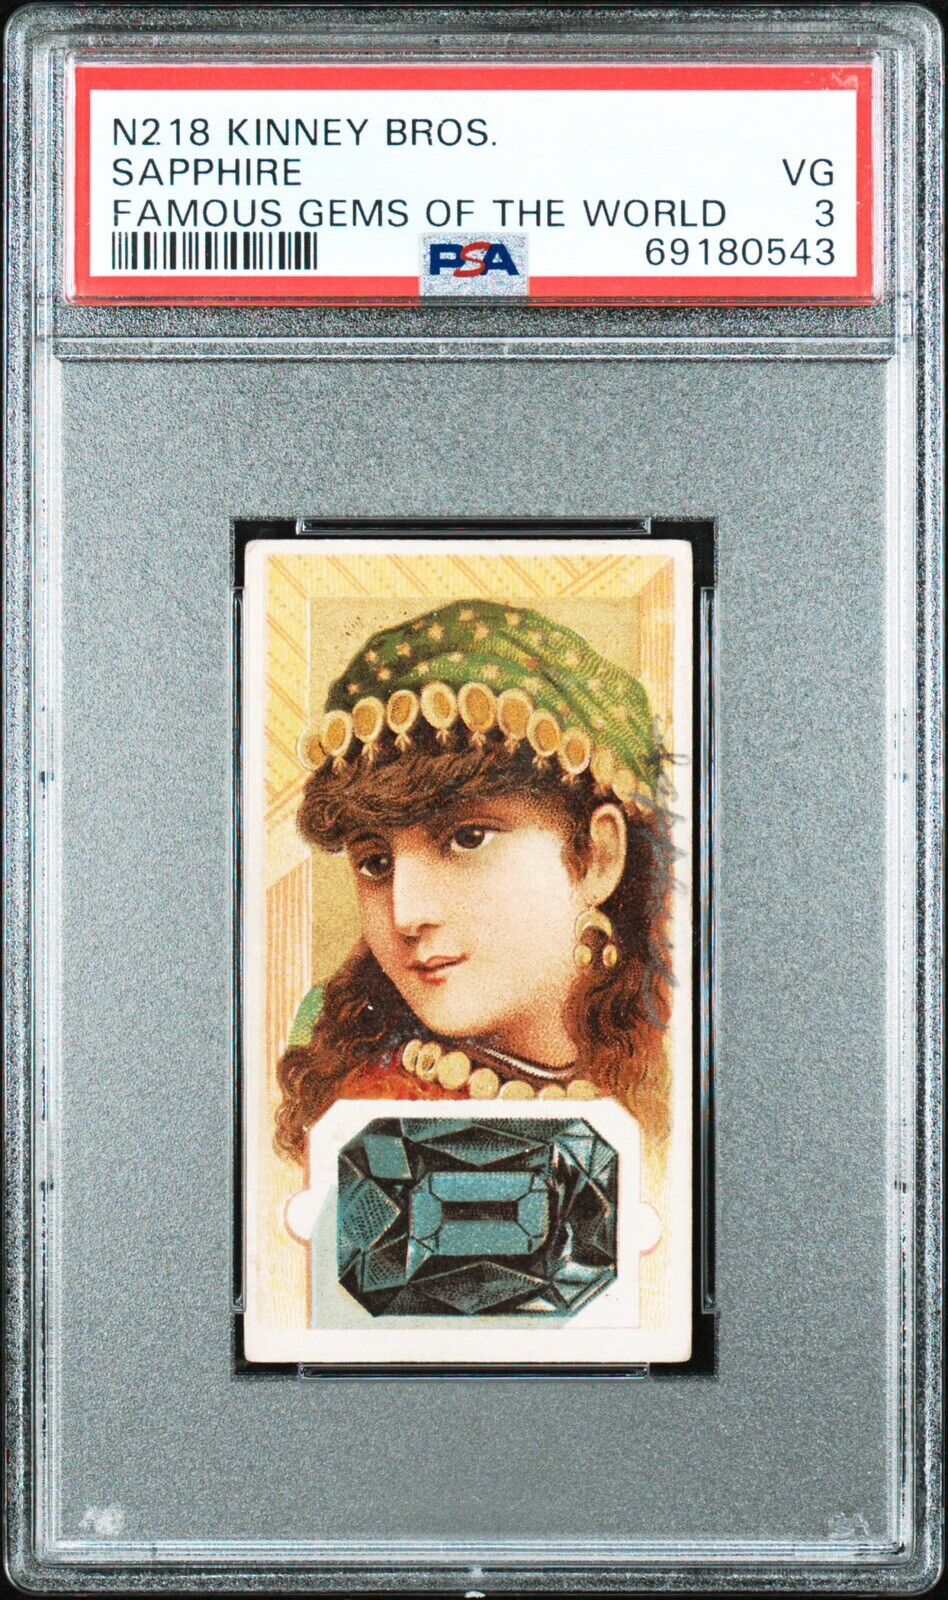 1889 N218 Kinney Bros. Famous Gems Of The World SAPPHIRE PSA 3 VG